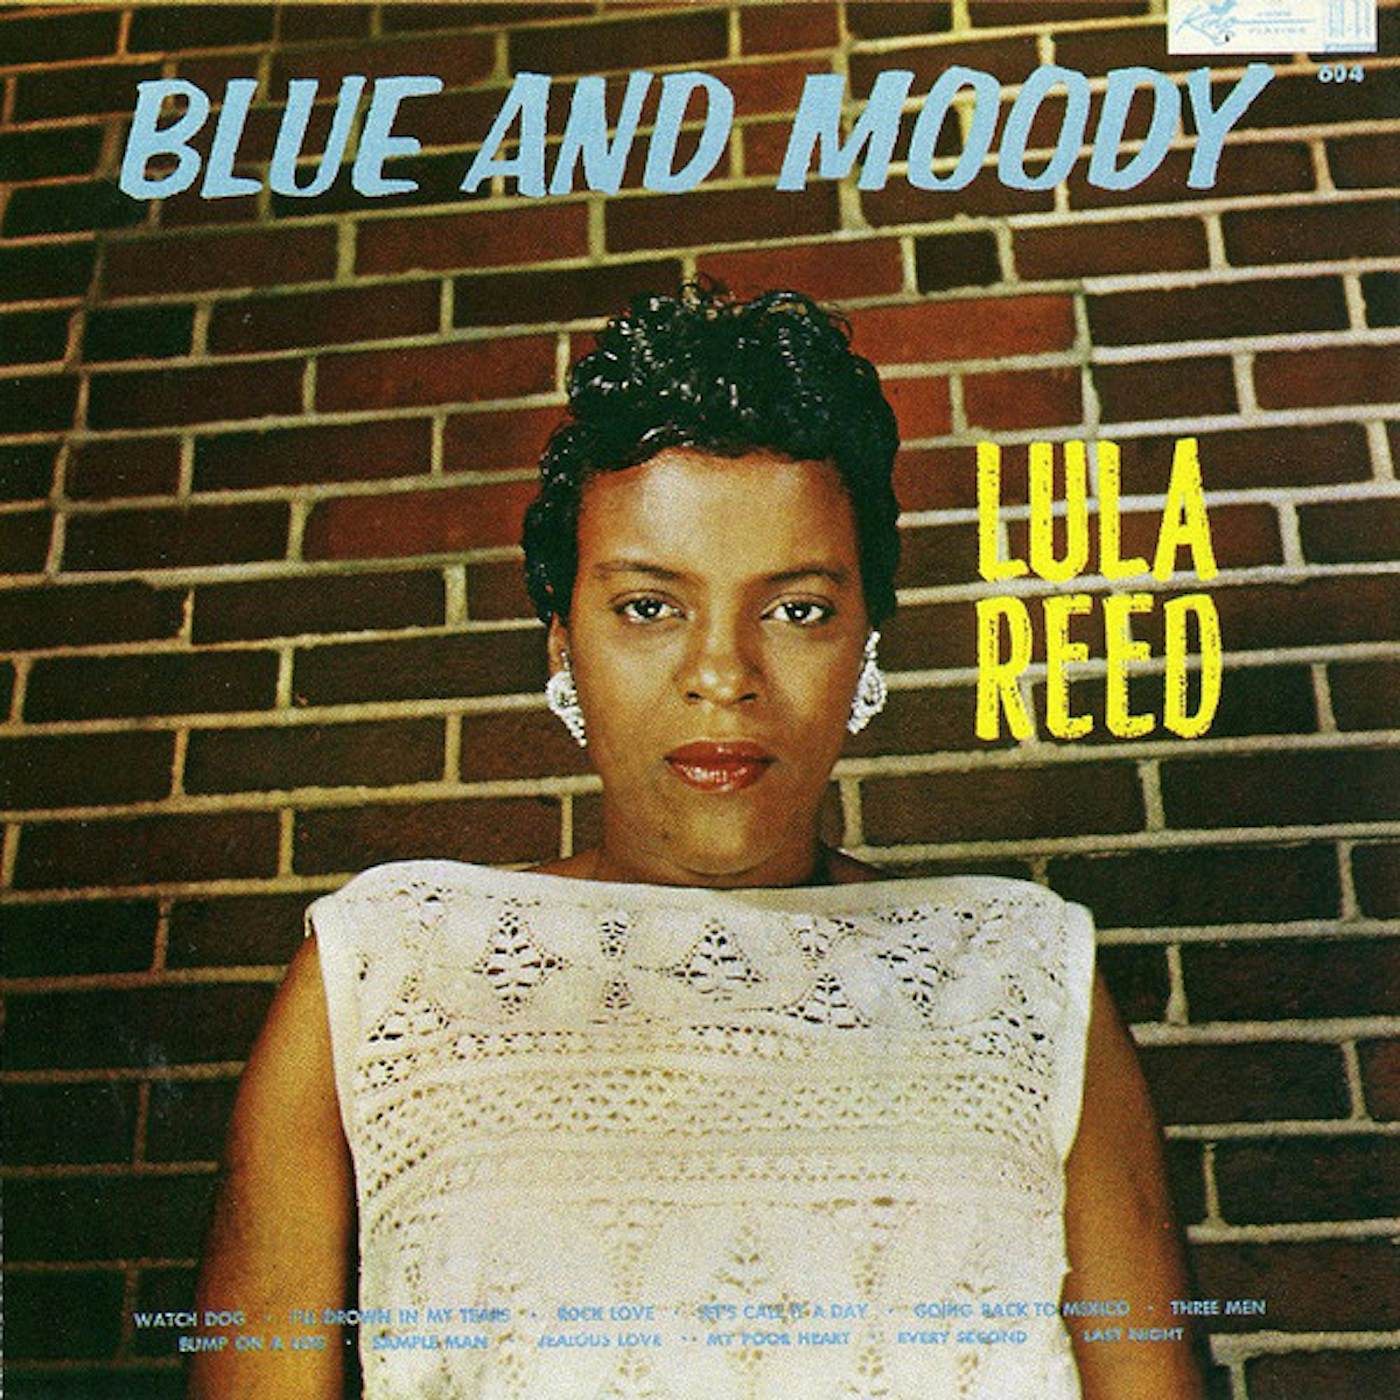 Lula Reed Blue and Moody Vinyl Record